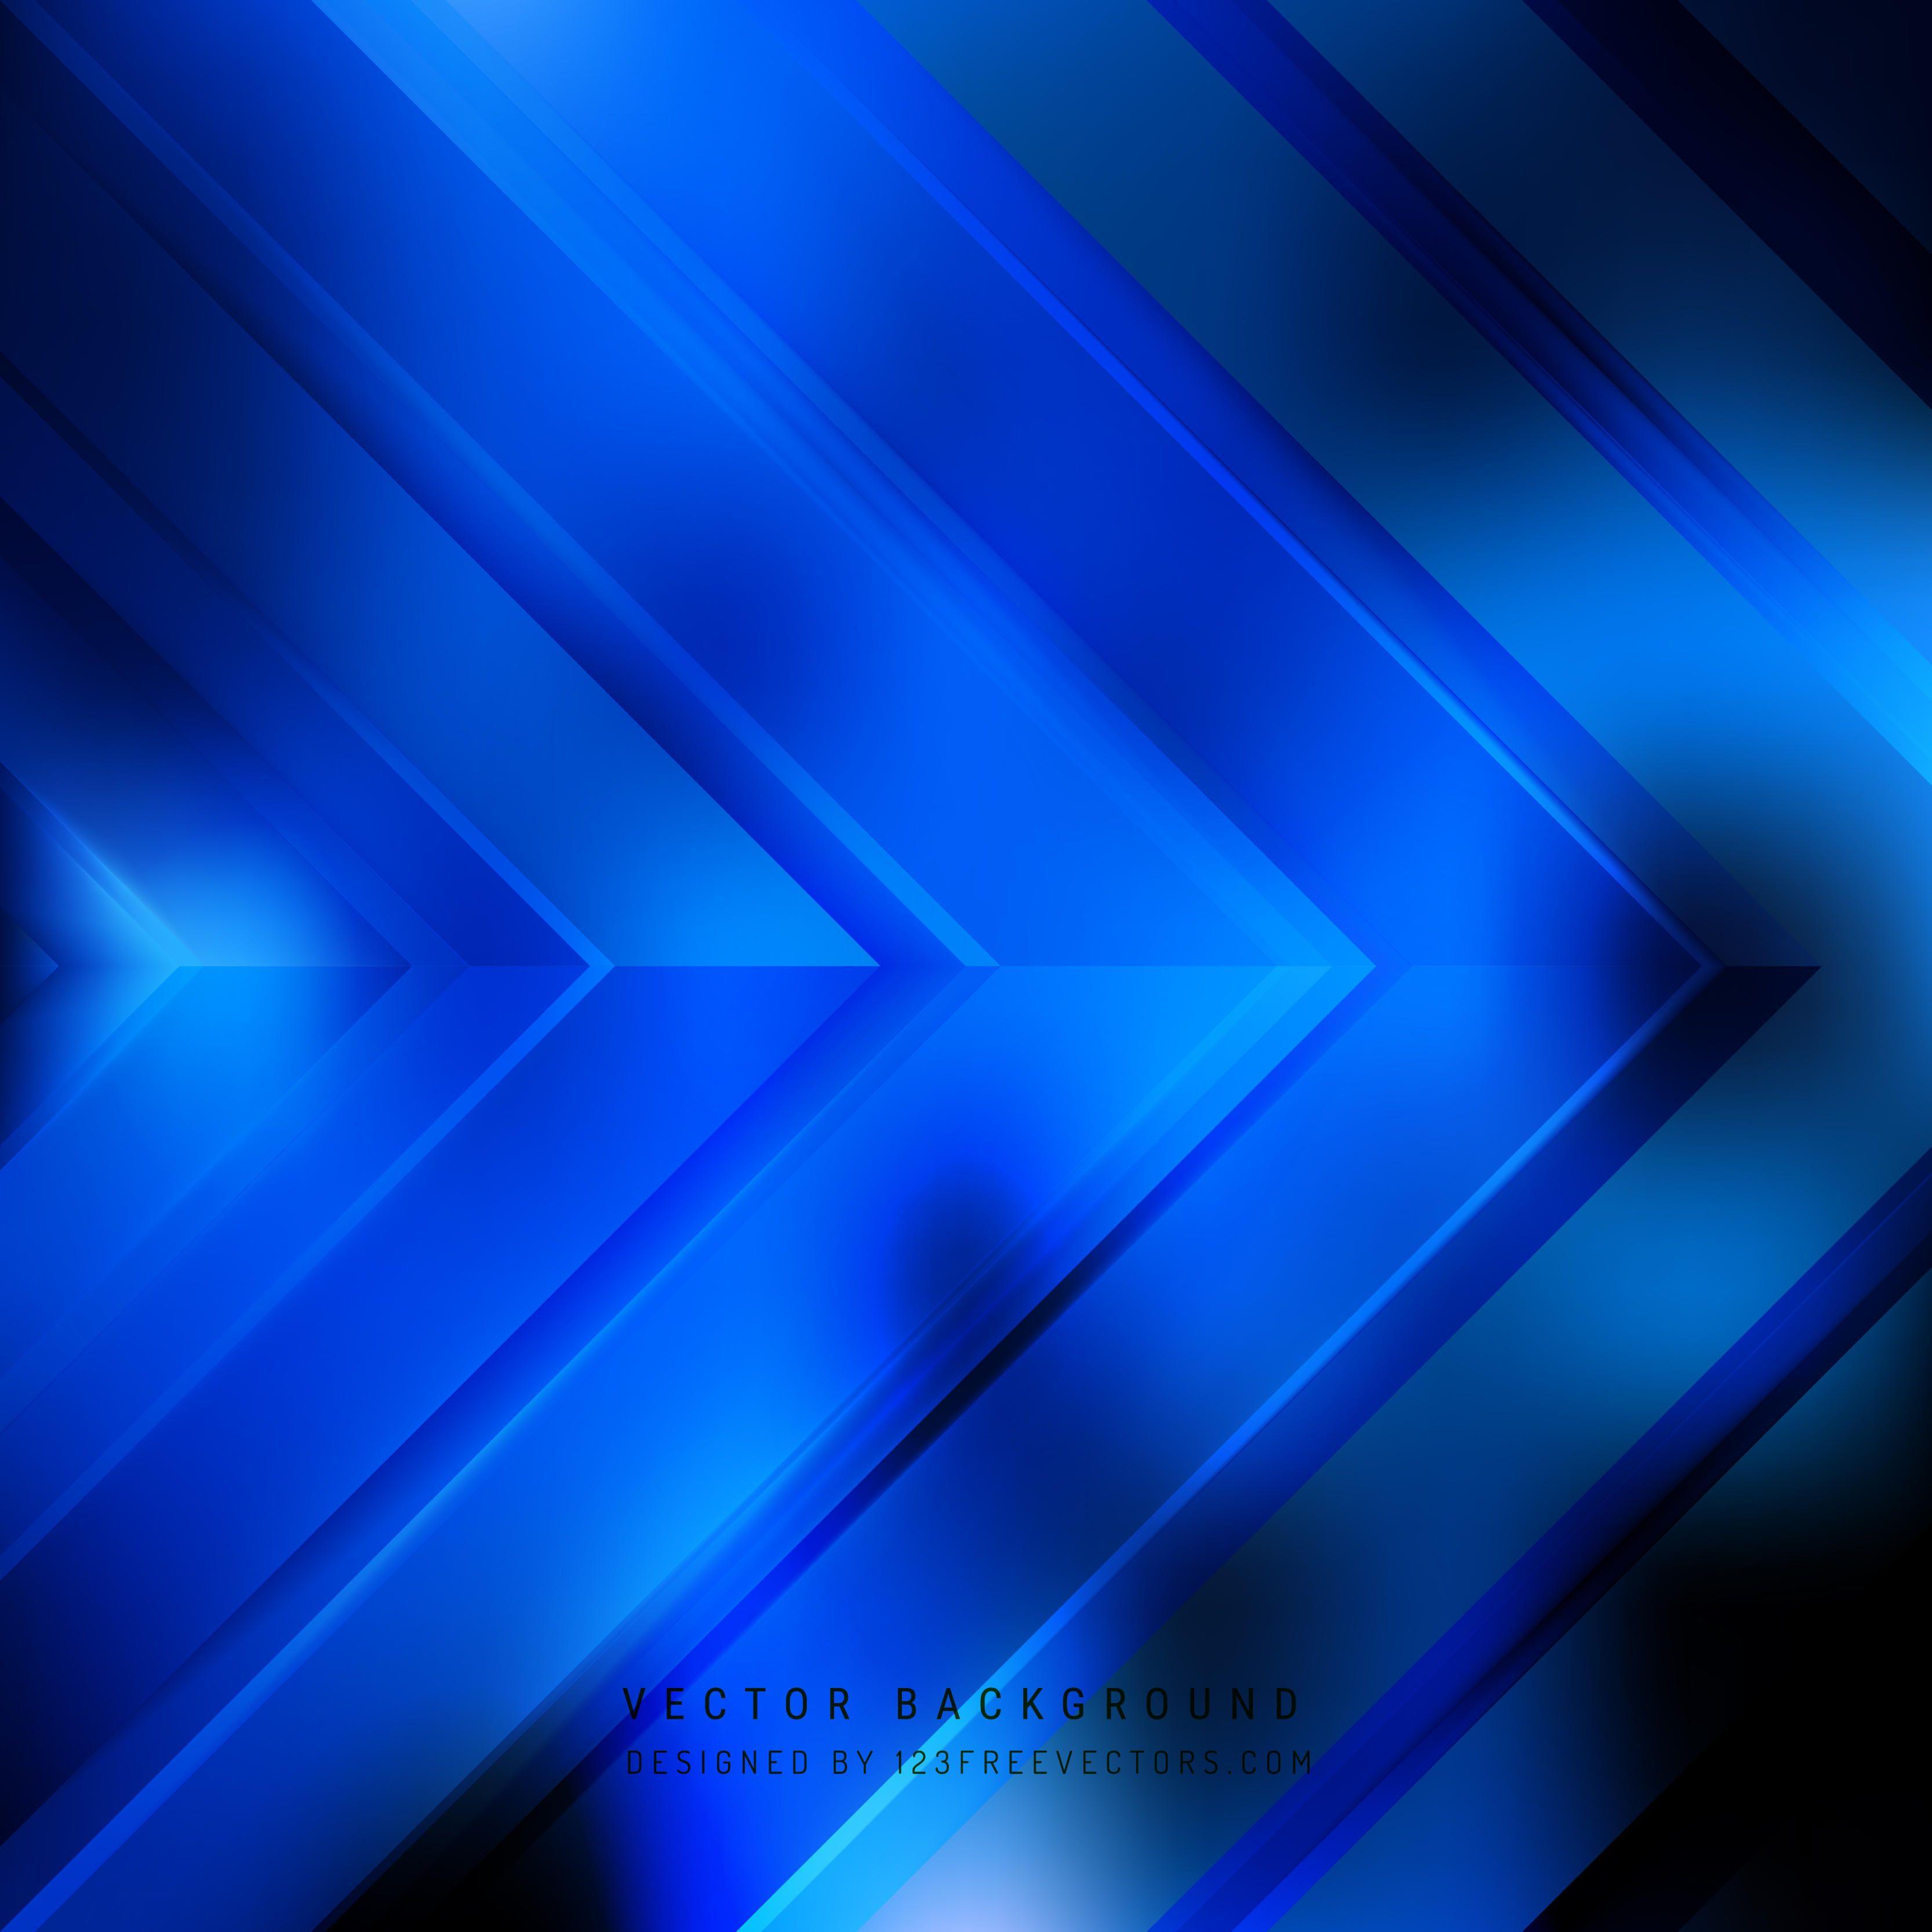 Abstract Blue Arrow Background DesignFreevectors